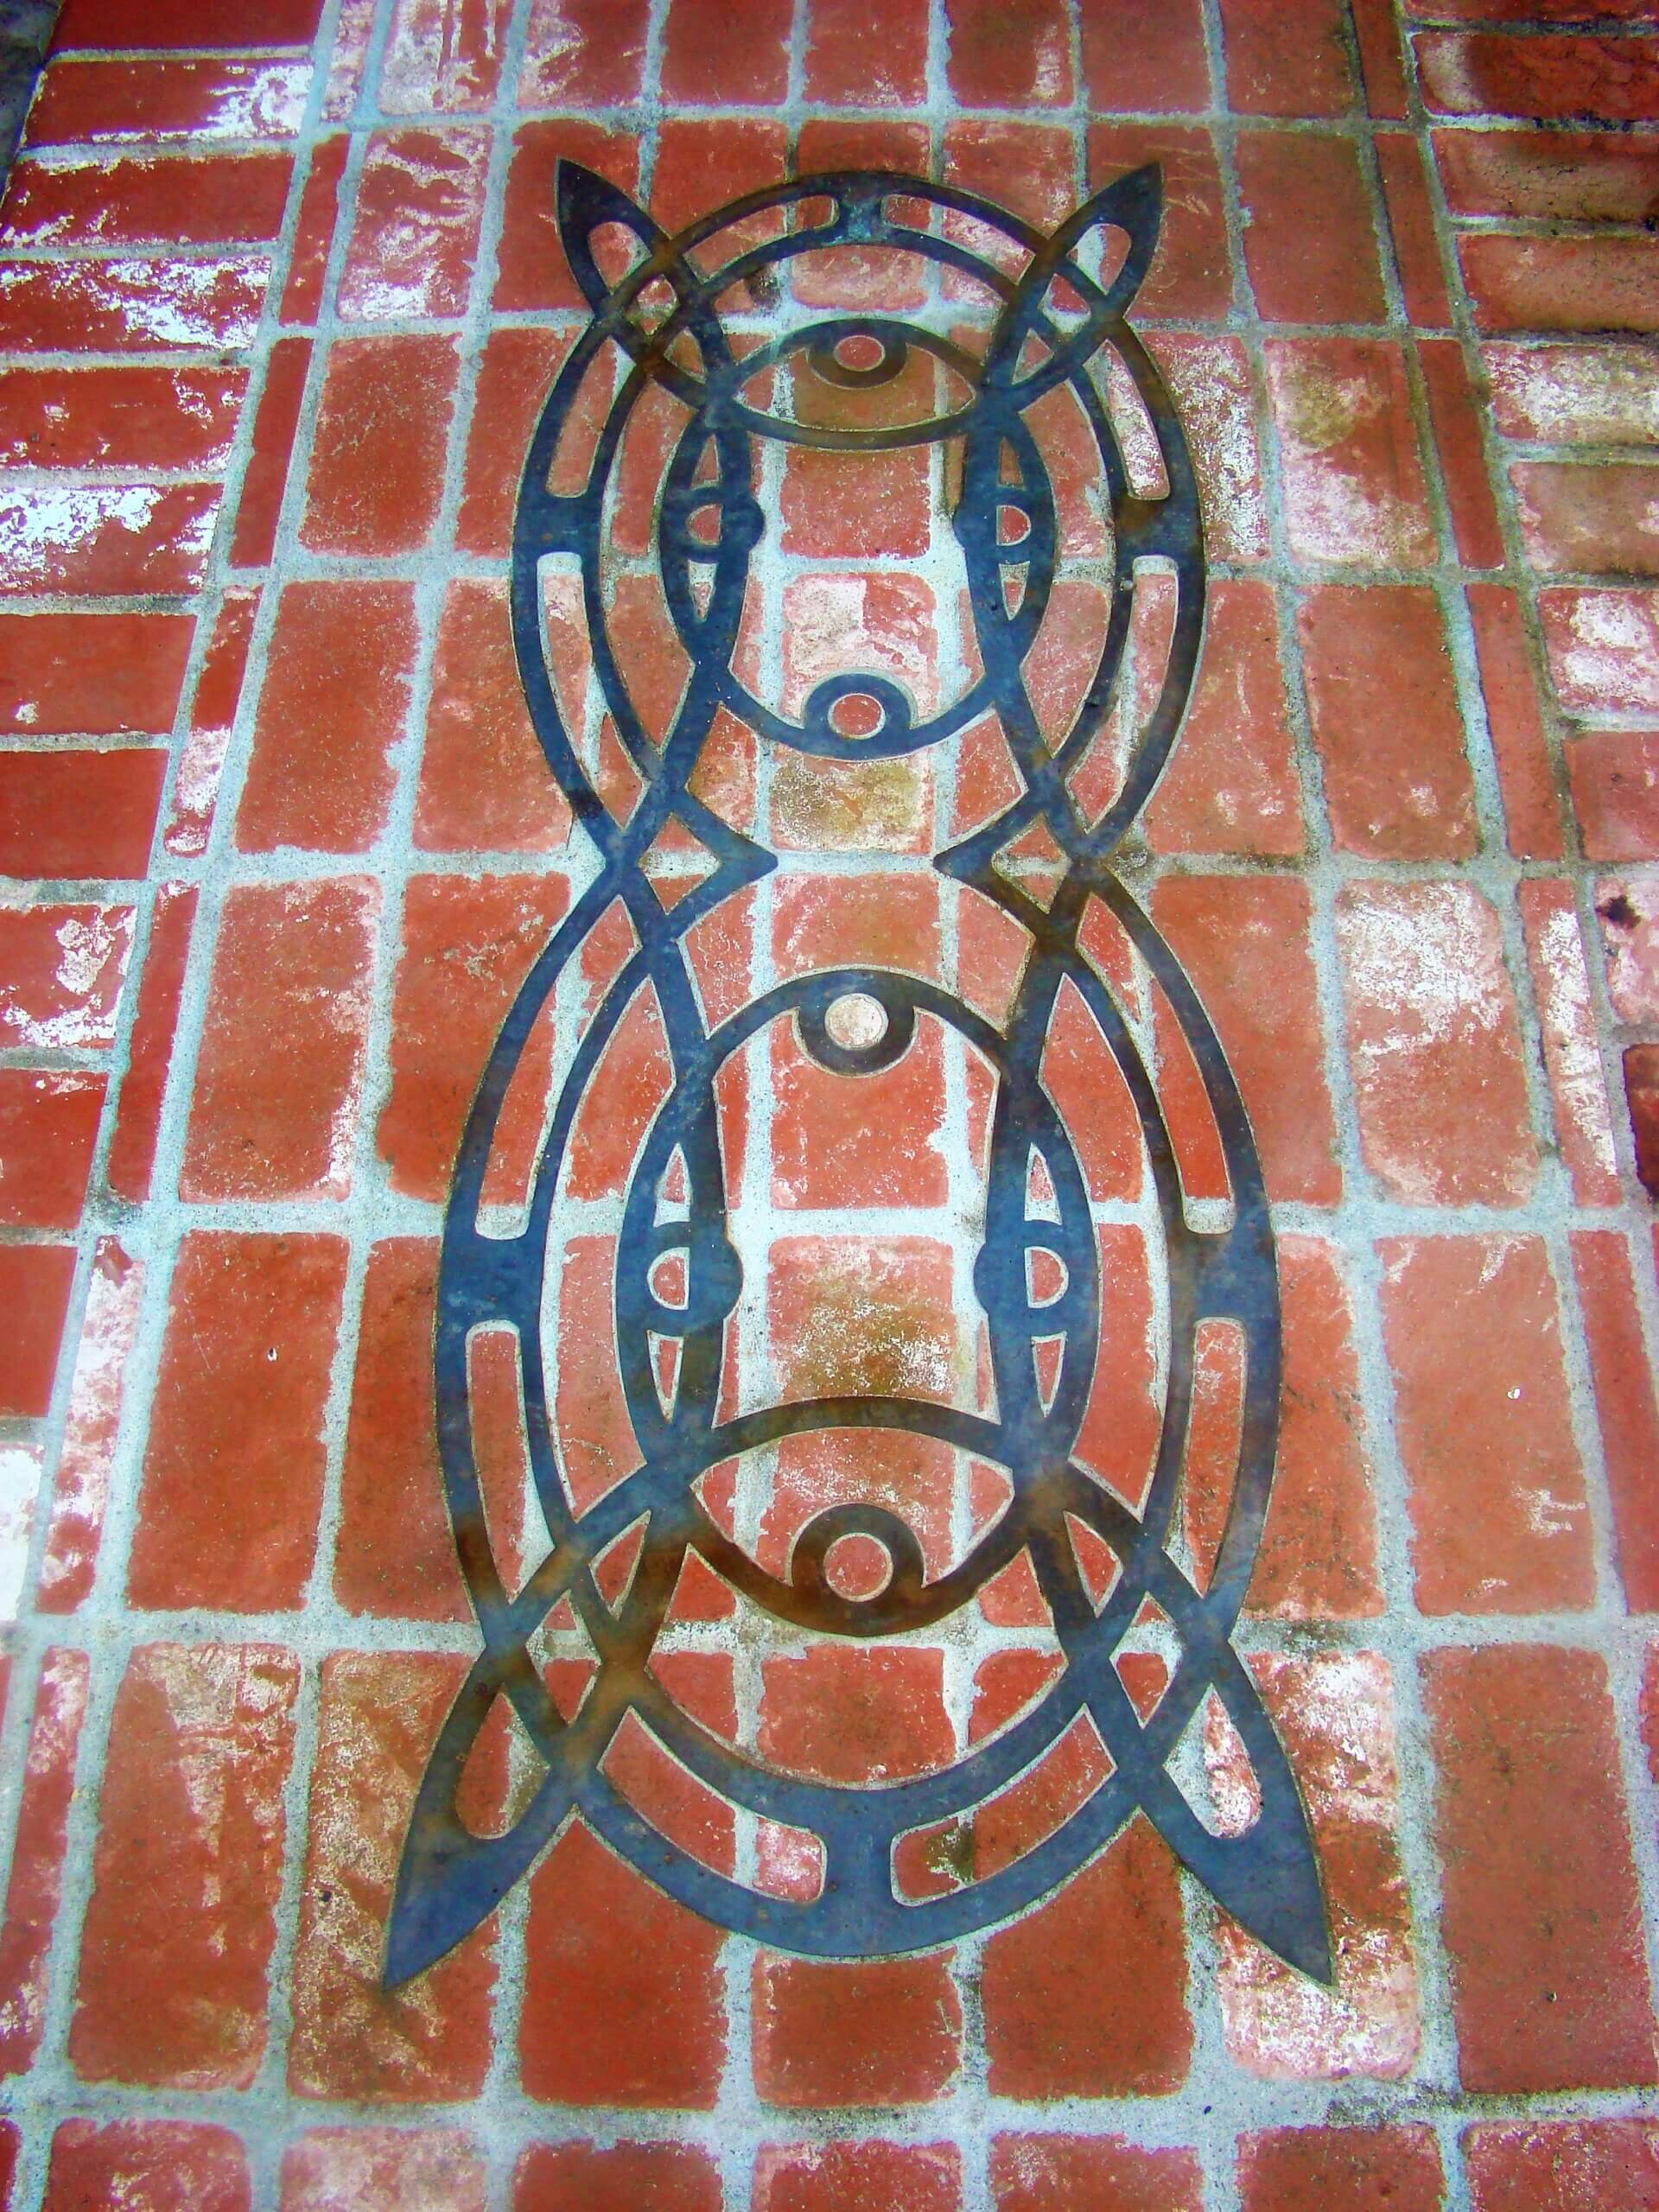 Custom copper designed inlay in brick patio